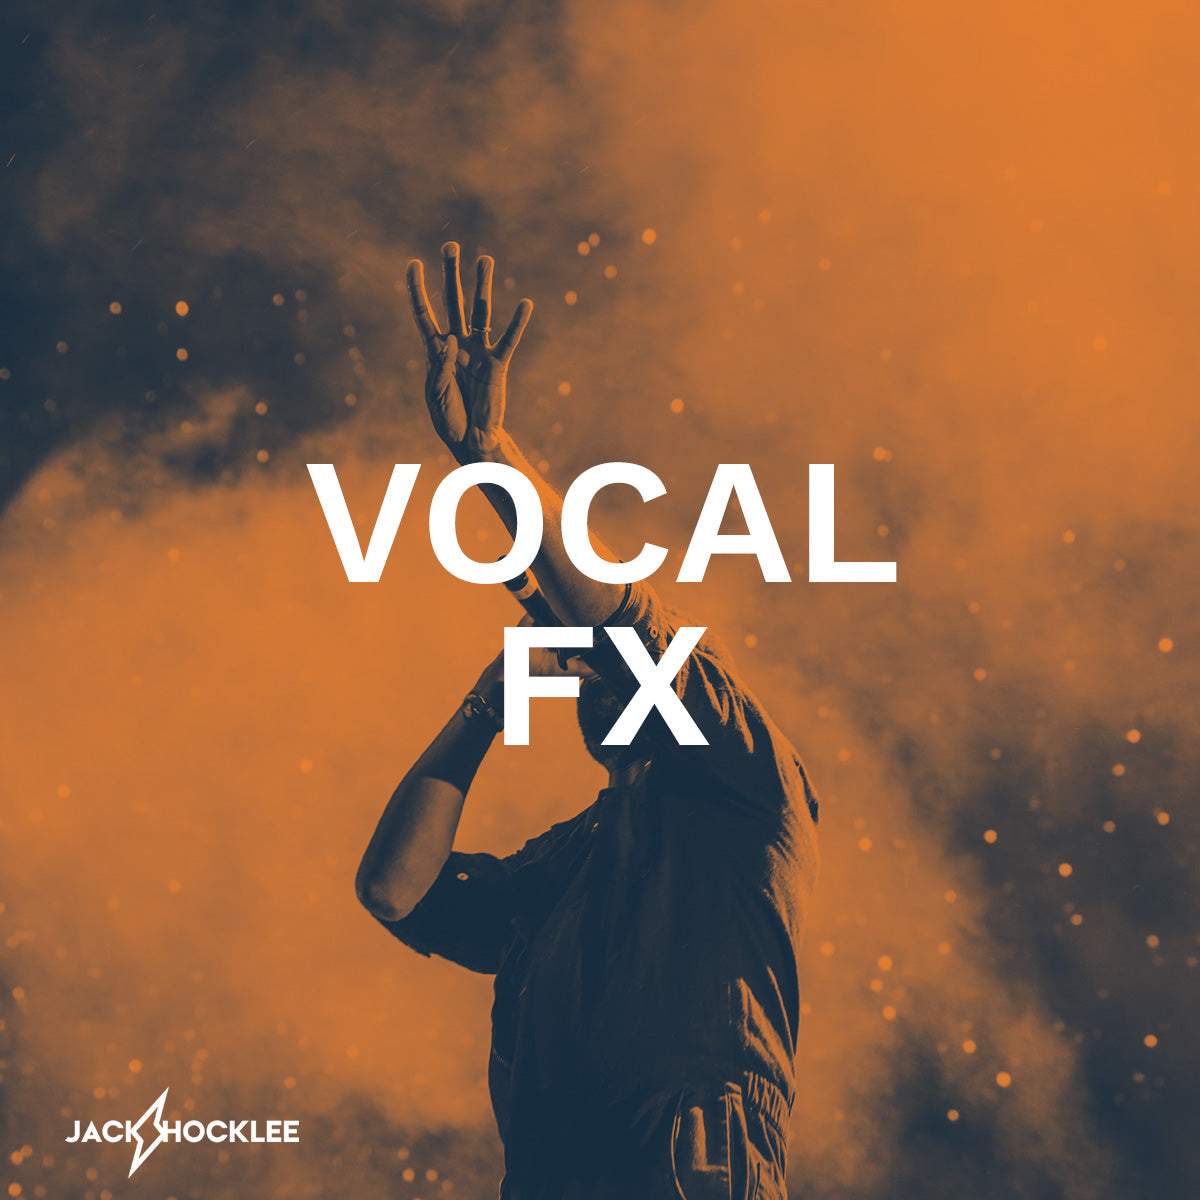 Vocal FX